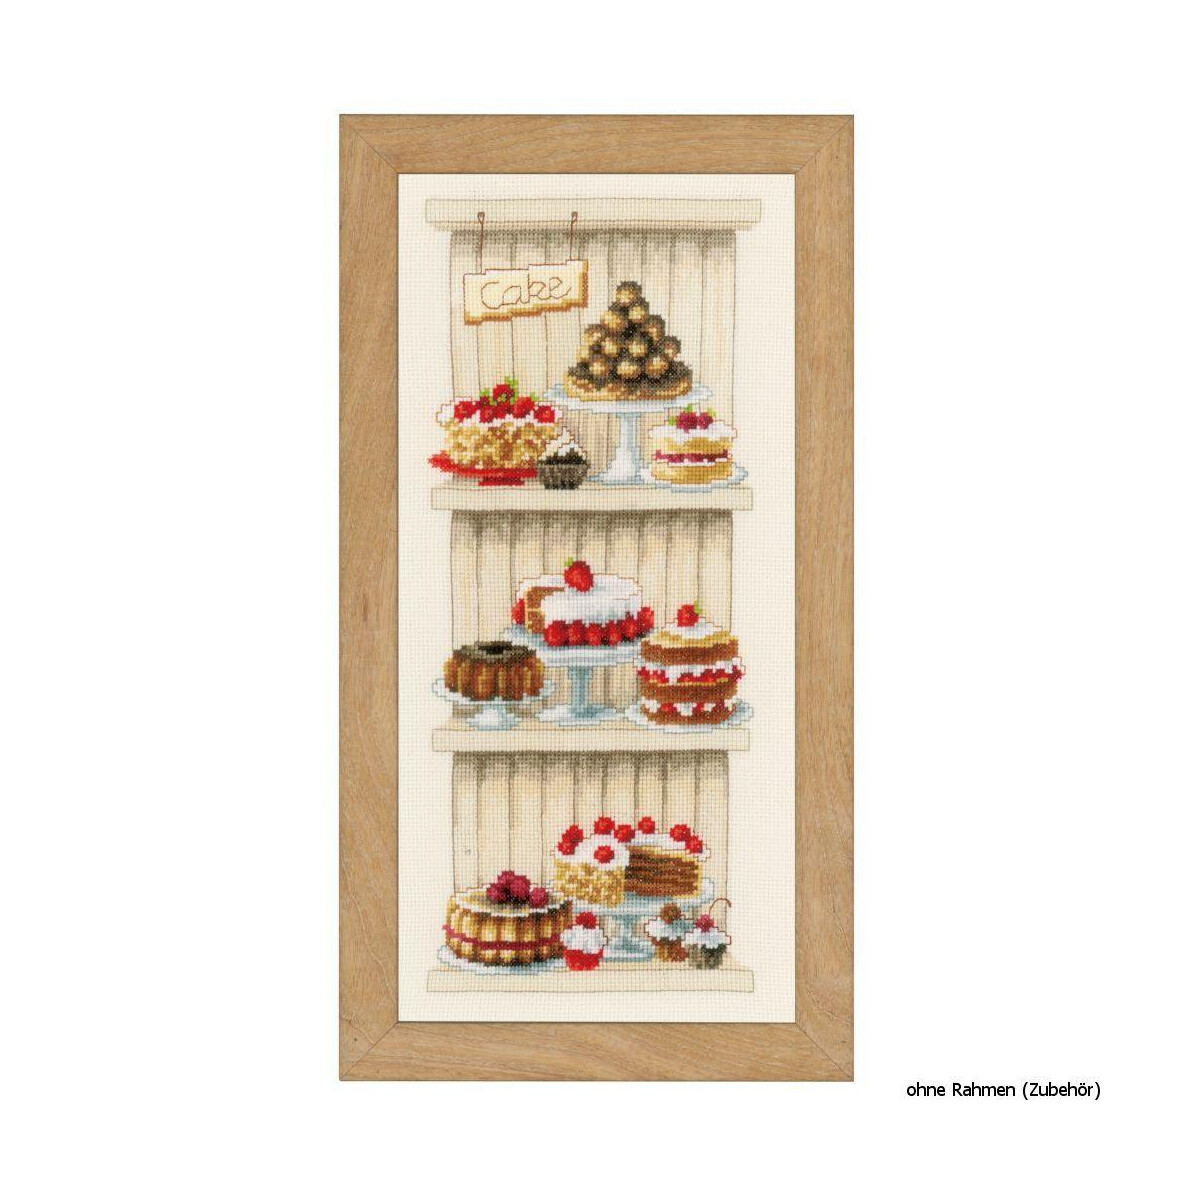 Vervaco Bordado Pack Count Pattern "Delightful Cupcakes